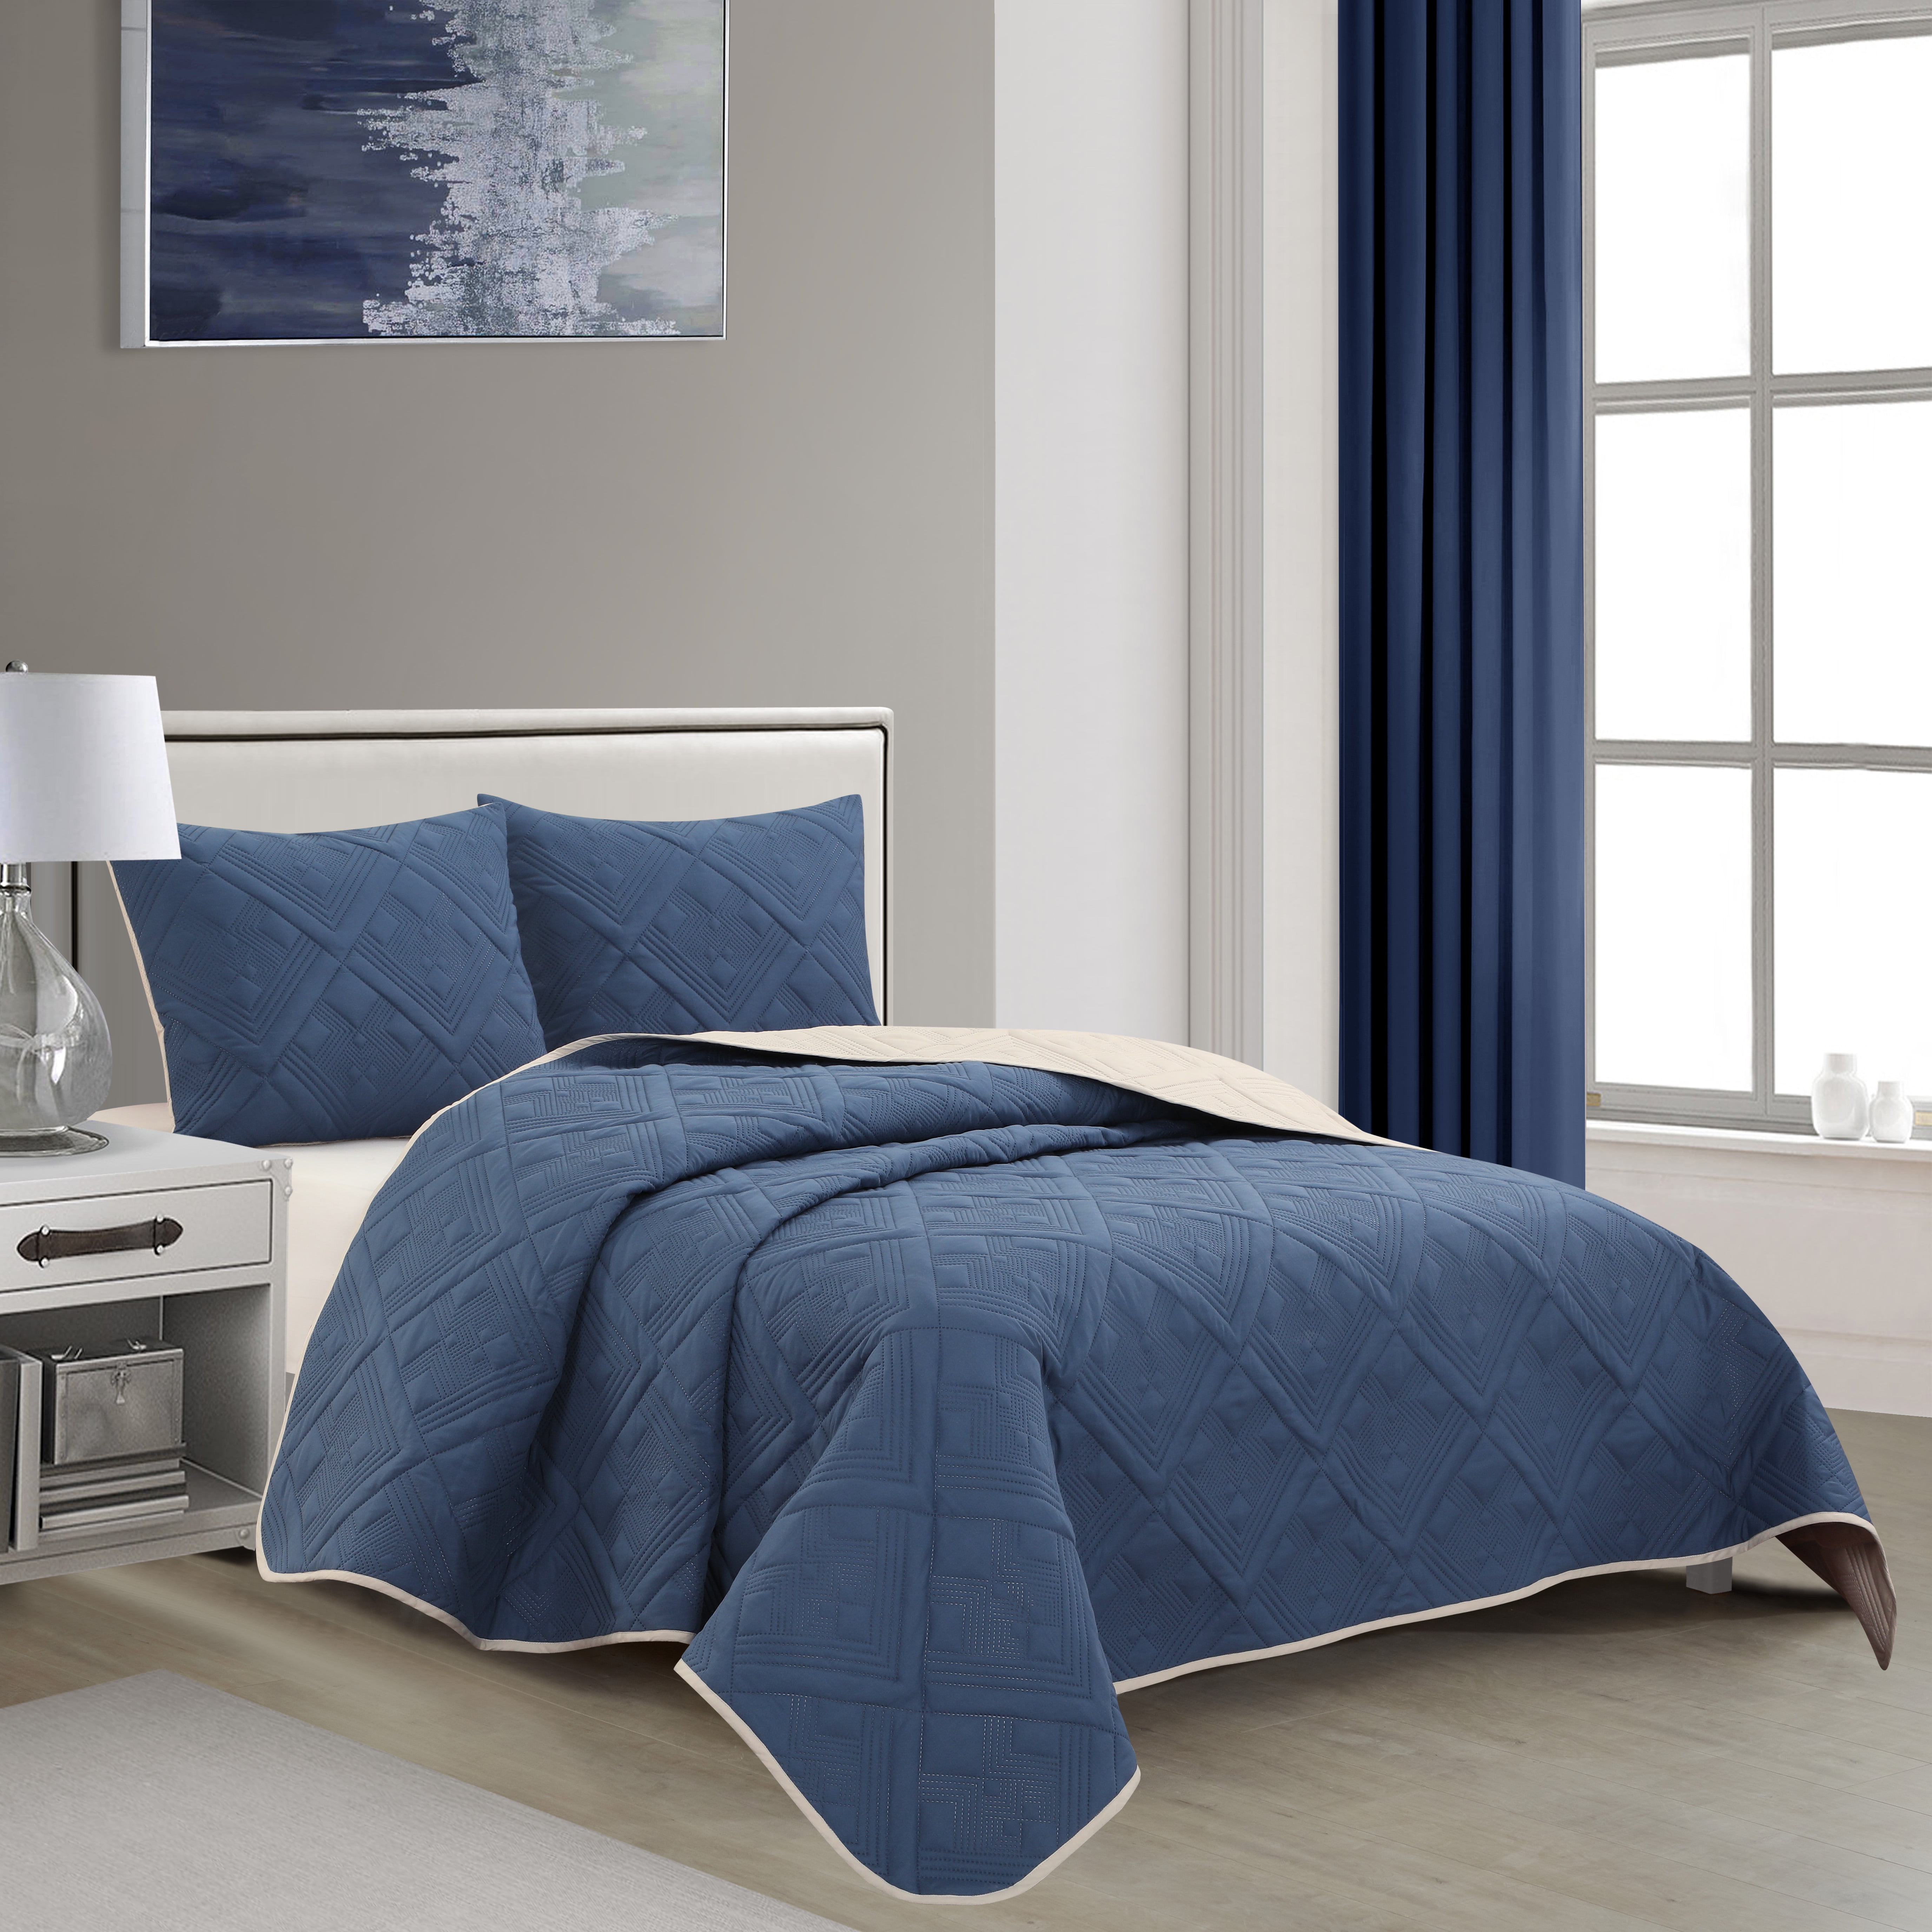 Premium Quality Oversized Global Patch Reversible Comforter Set 